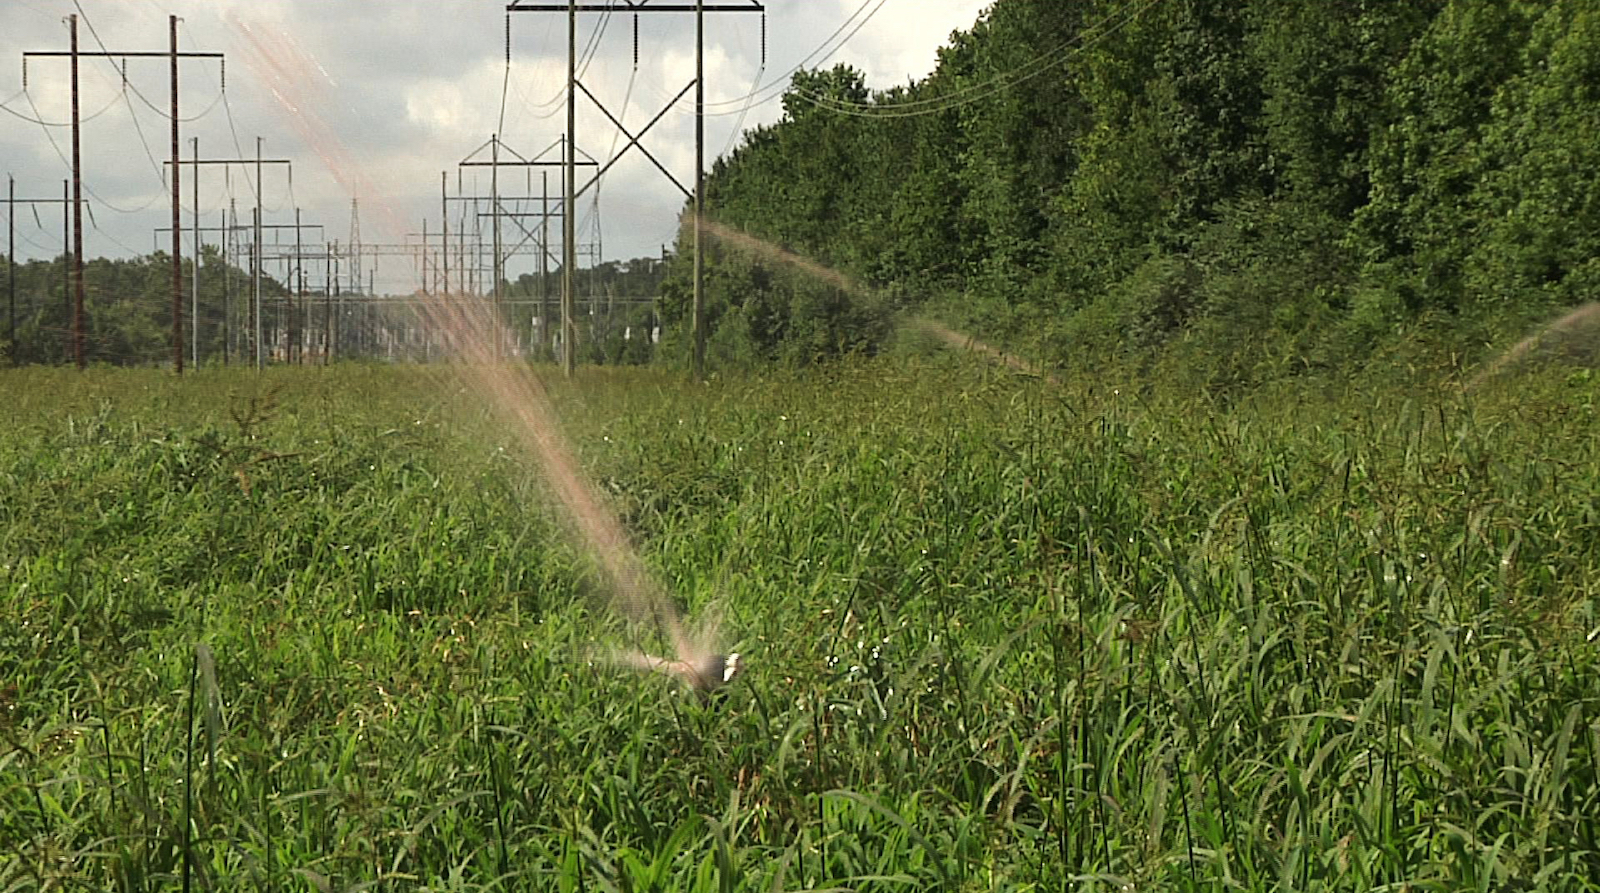 a photo of a field being sprayed with hog manure fertilizer